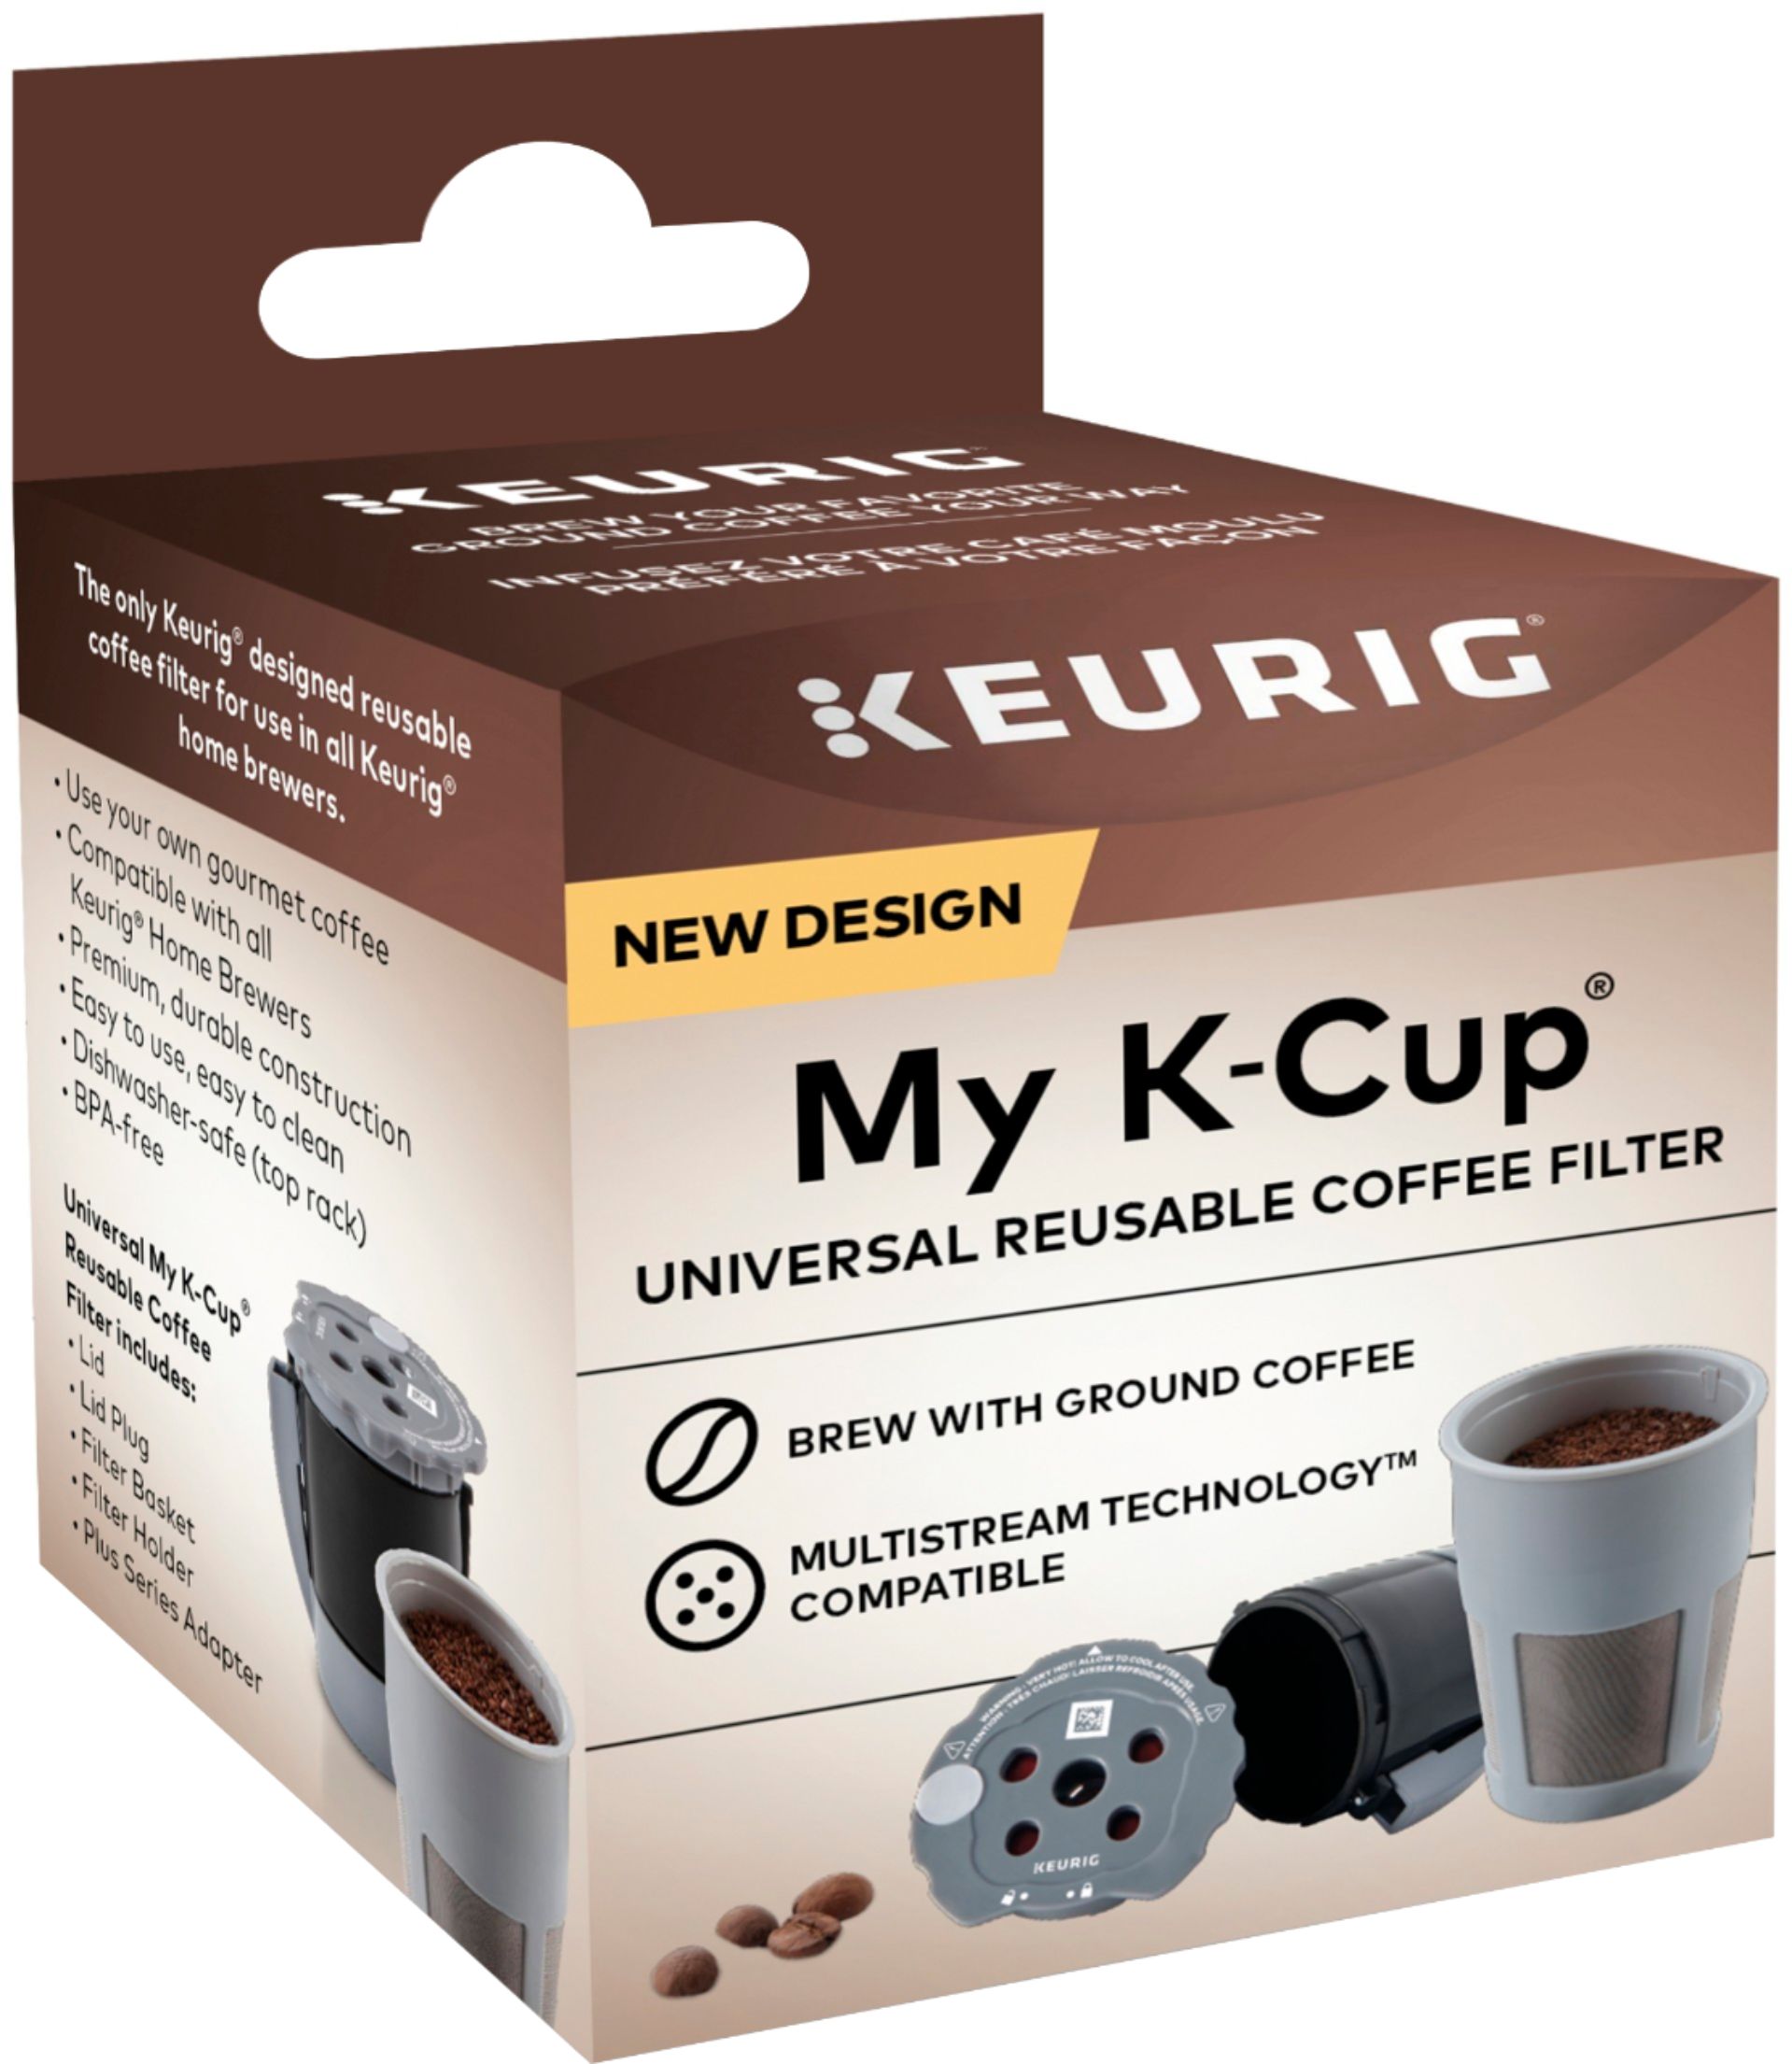 Keurig My K Cup Universal Reusable Filter Multistream Technology Gray 5000351186 Best Buy